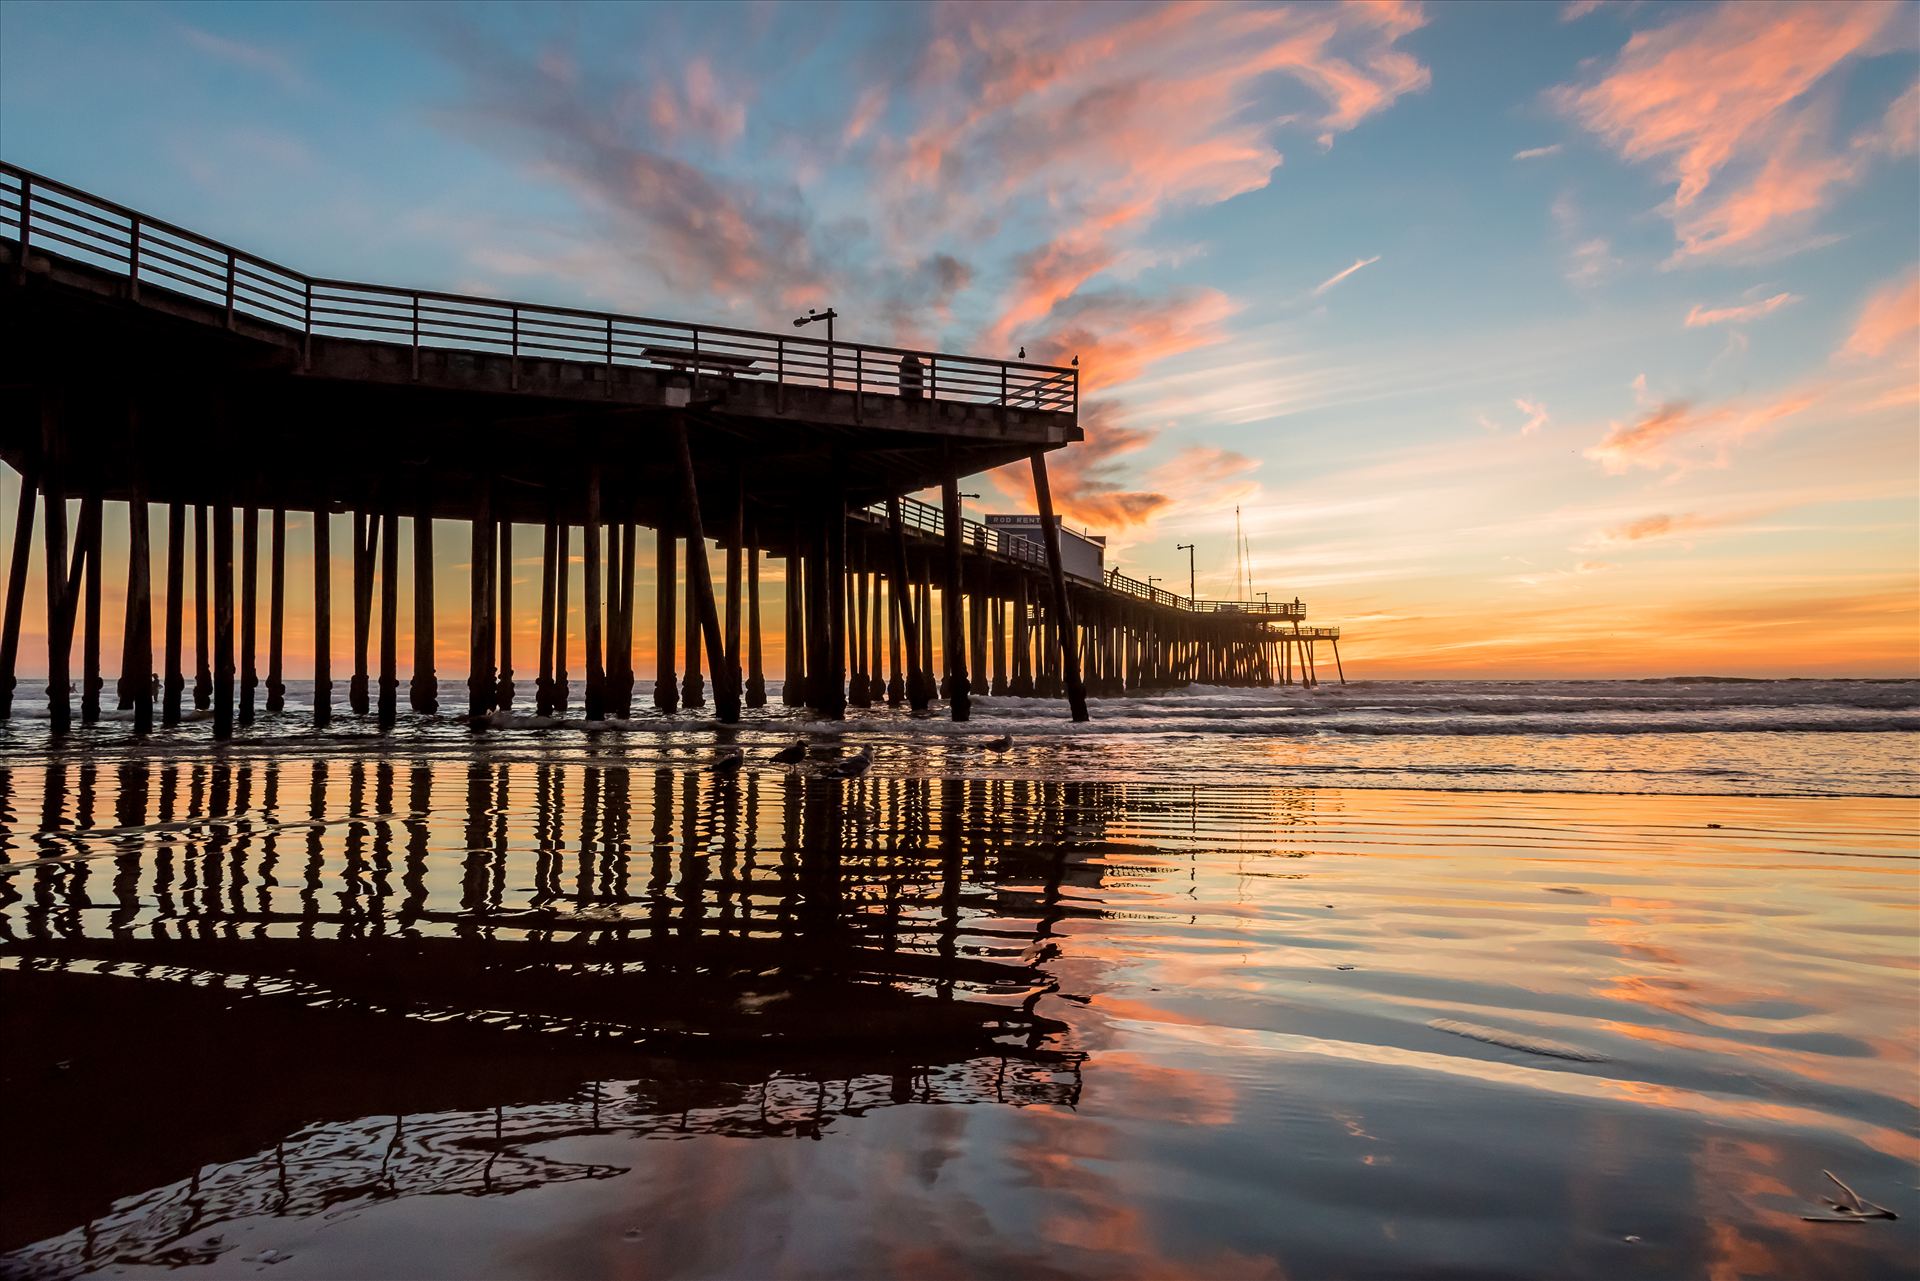 Fairytale Sunset Pismo Pier Reflection.jpg  by Sarah Williams